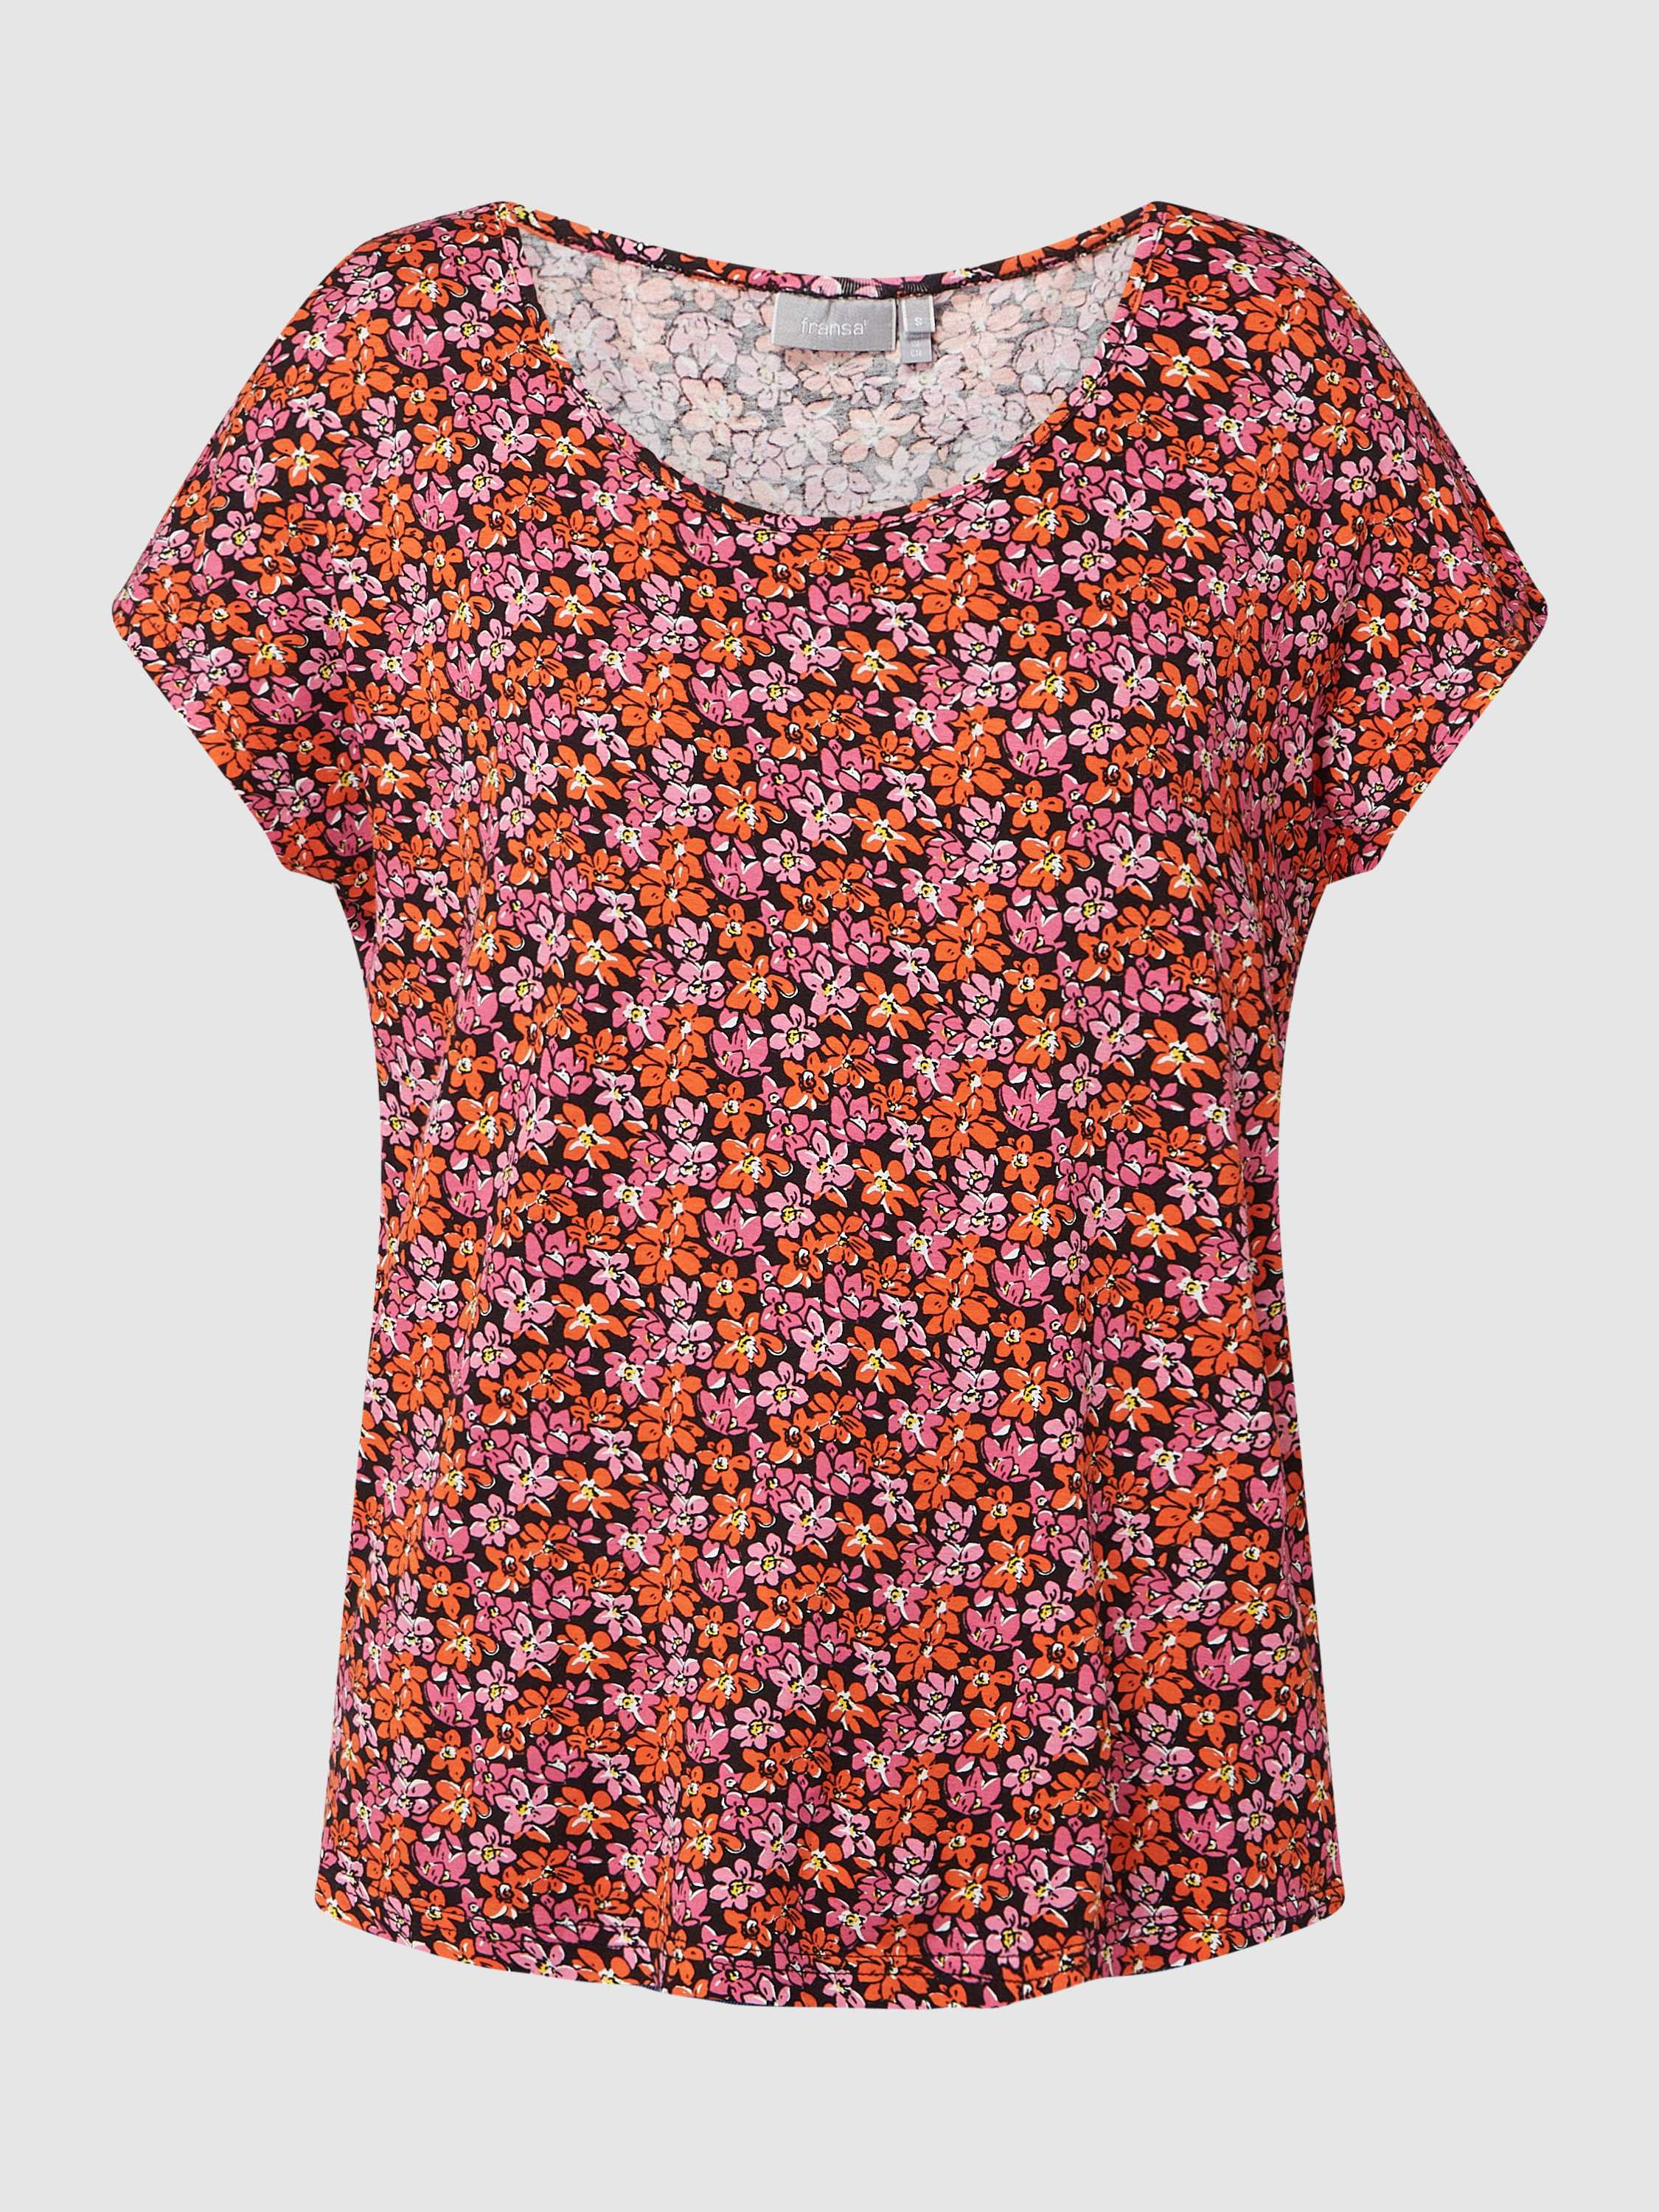 Blusenshirt mit floralem Muster Modell 'Fedot', Peek & Cloppenburg